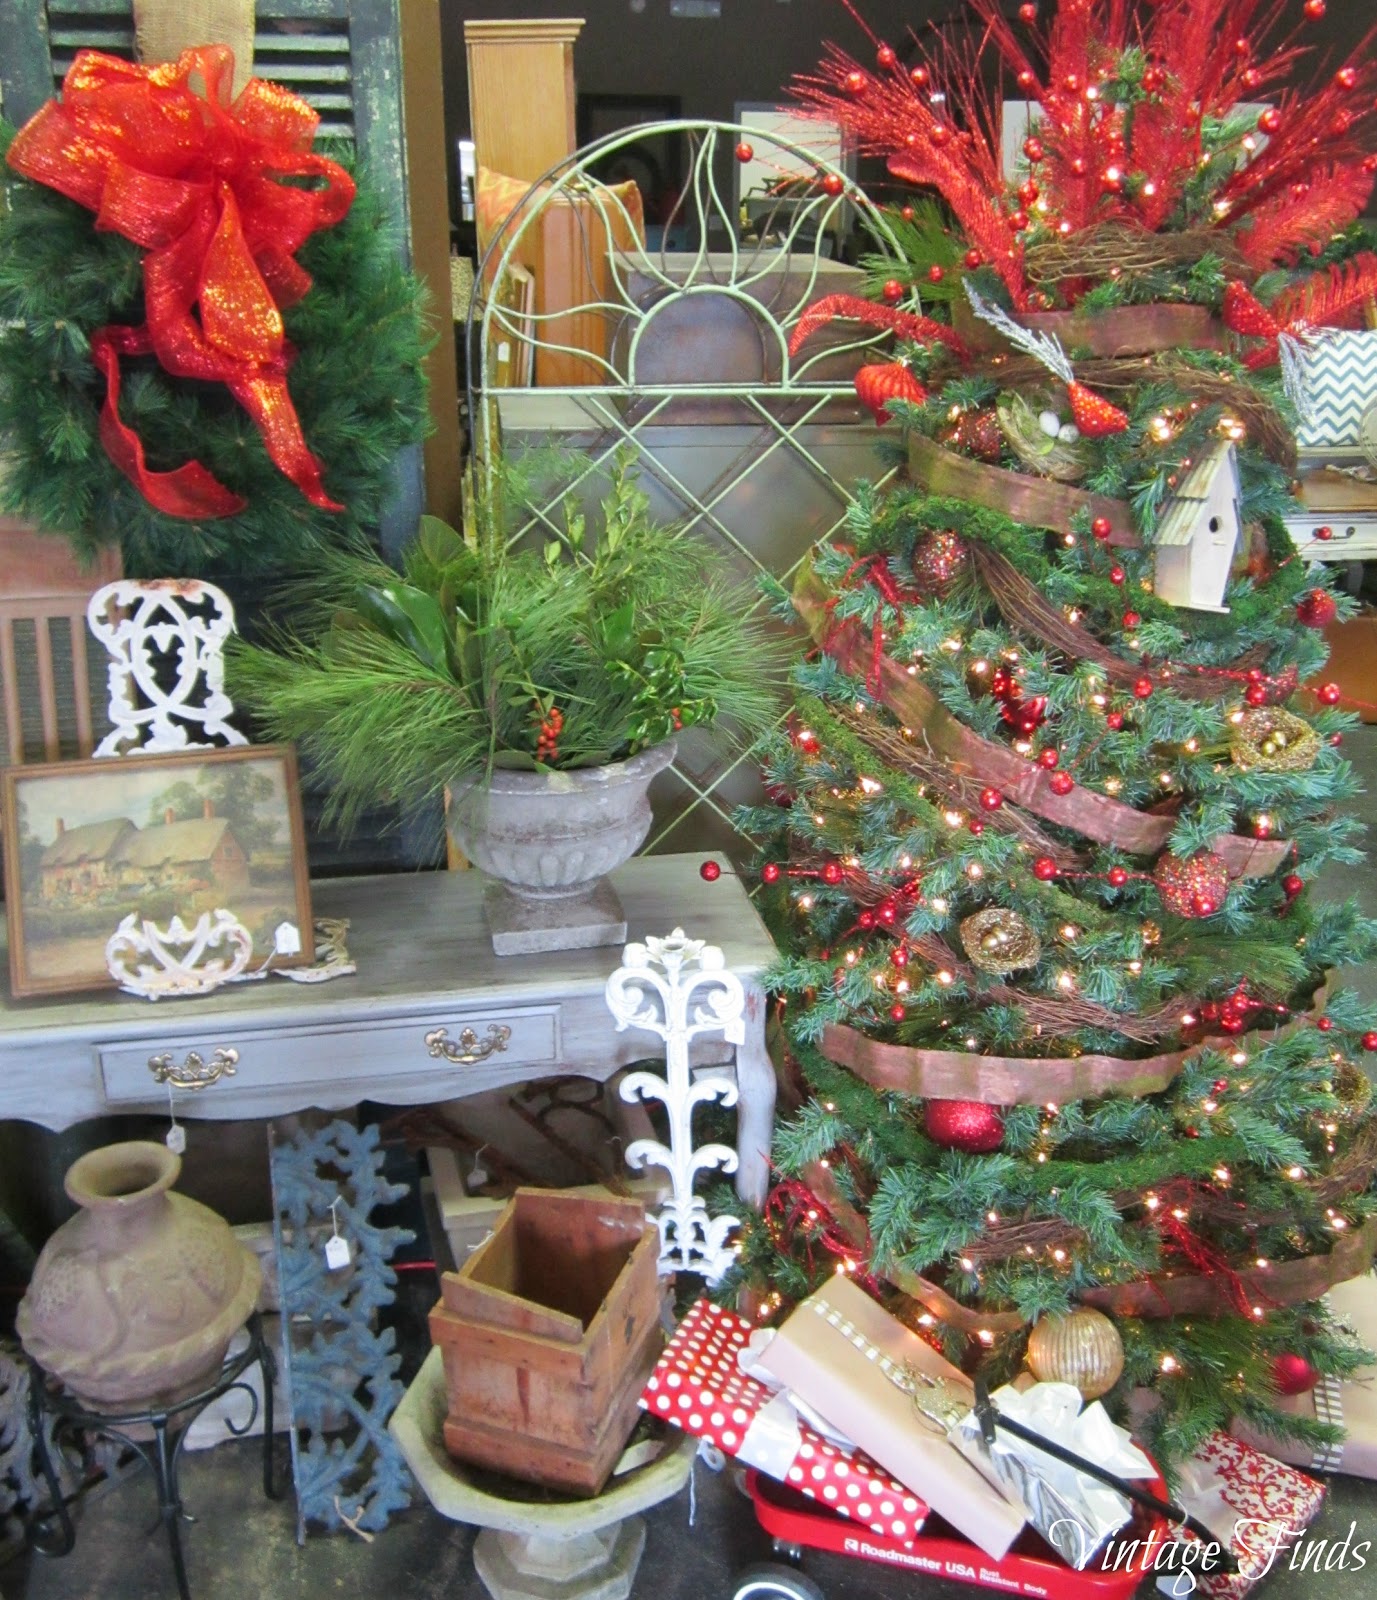 Vintage Finds: Natural Christmas Tree